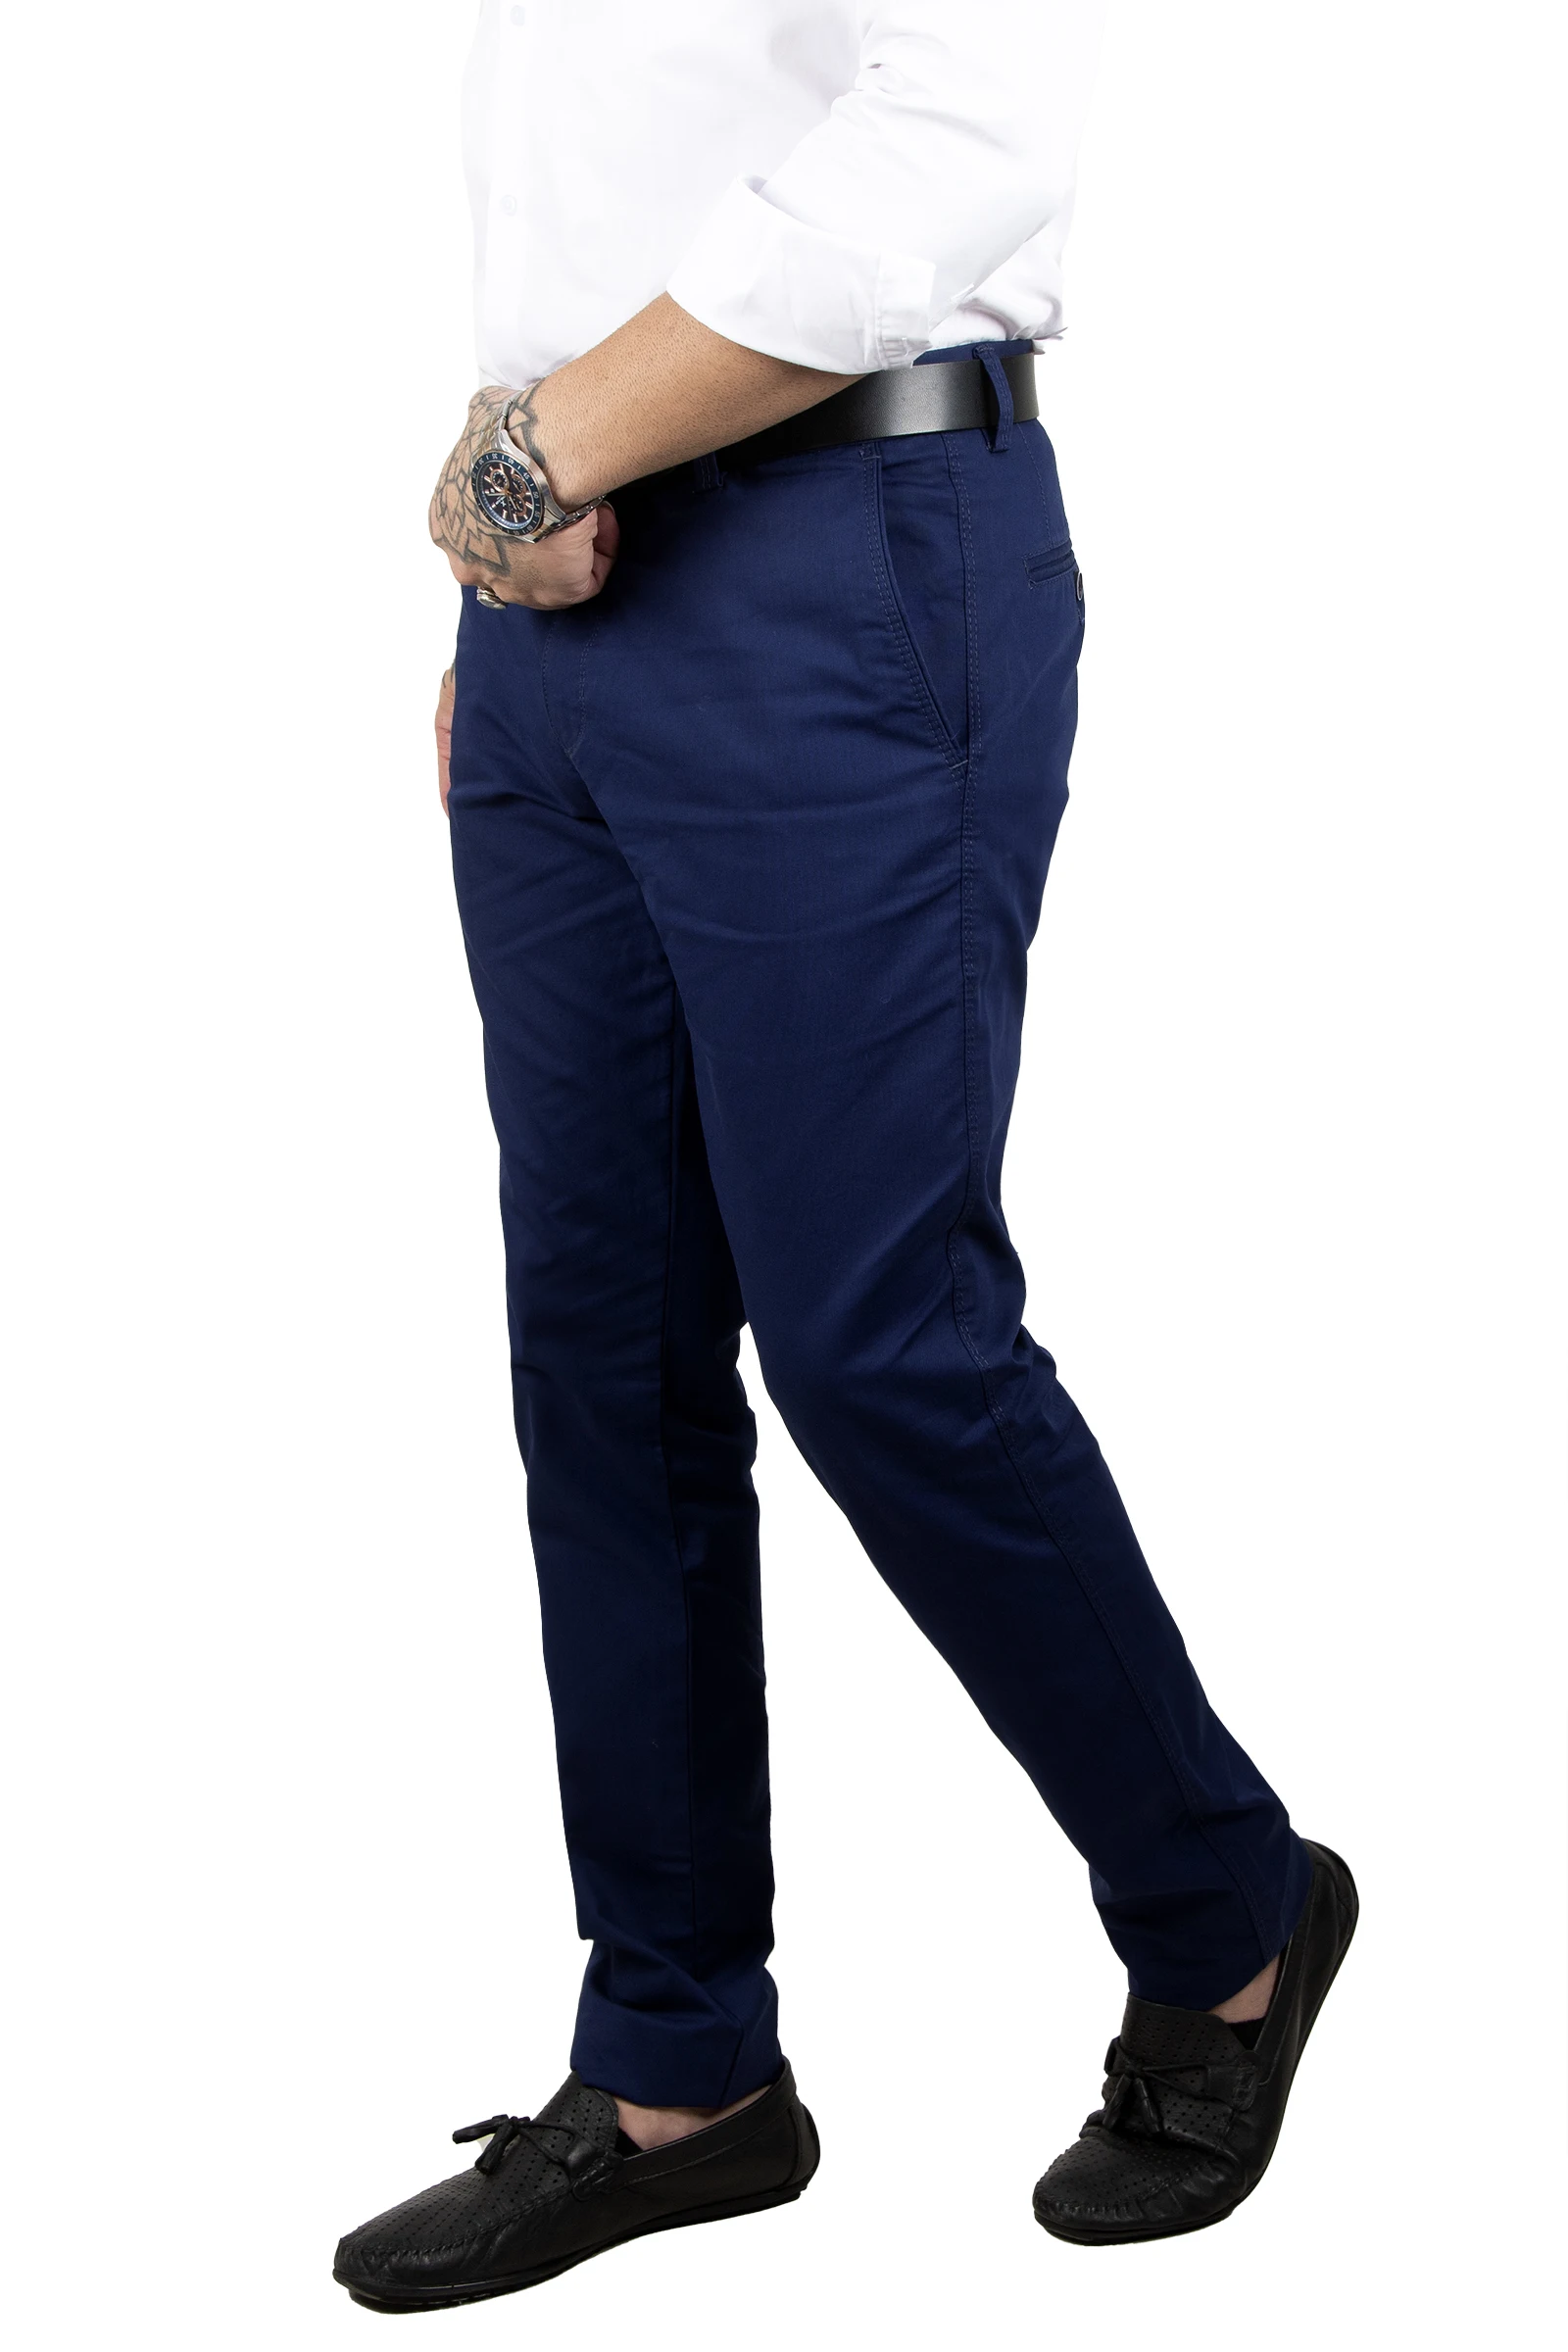 

DeepSEA Narrow Cut Lycra Men 'S Linen Pants 2201516